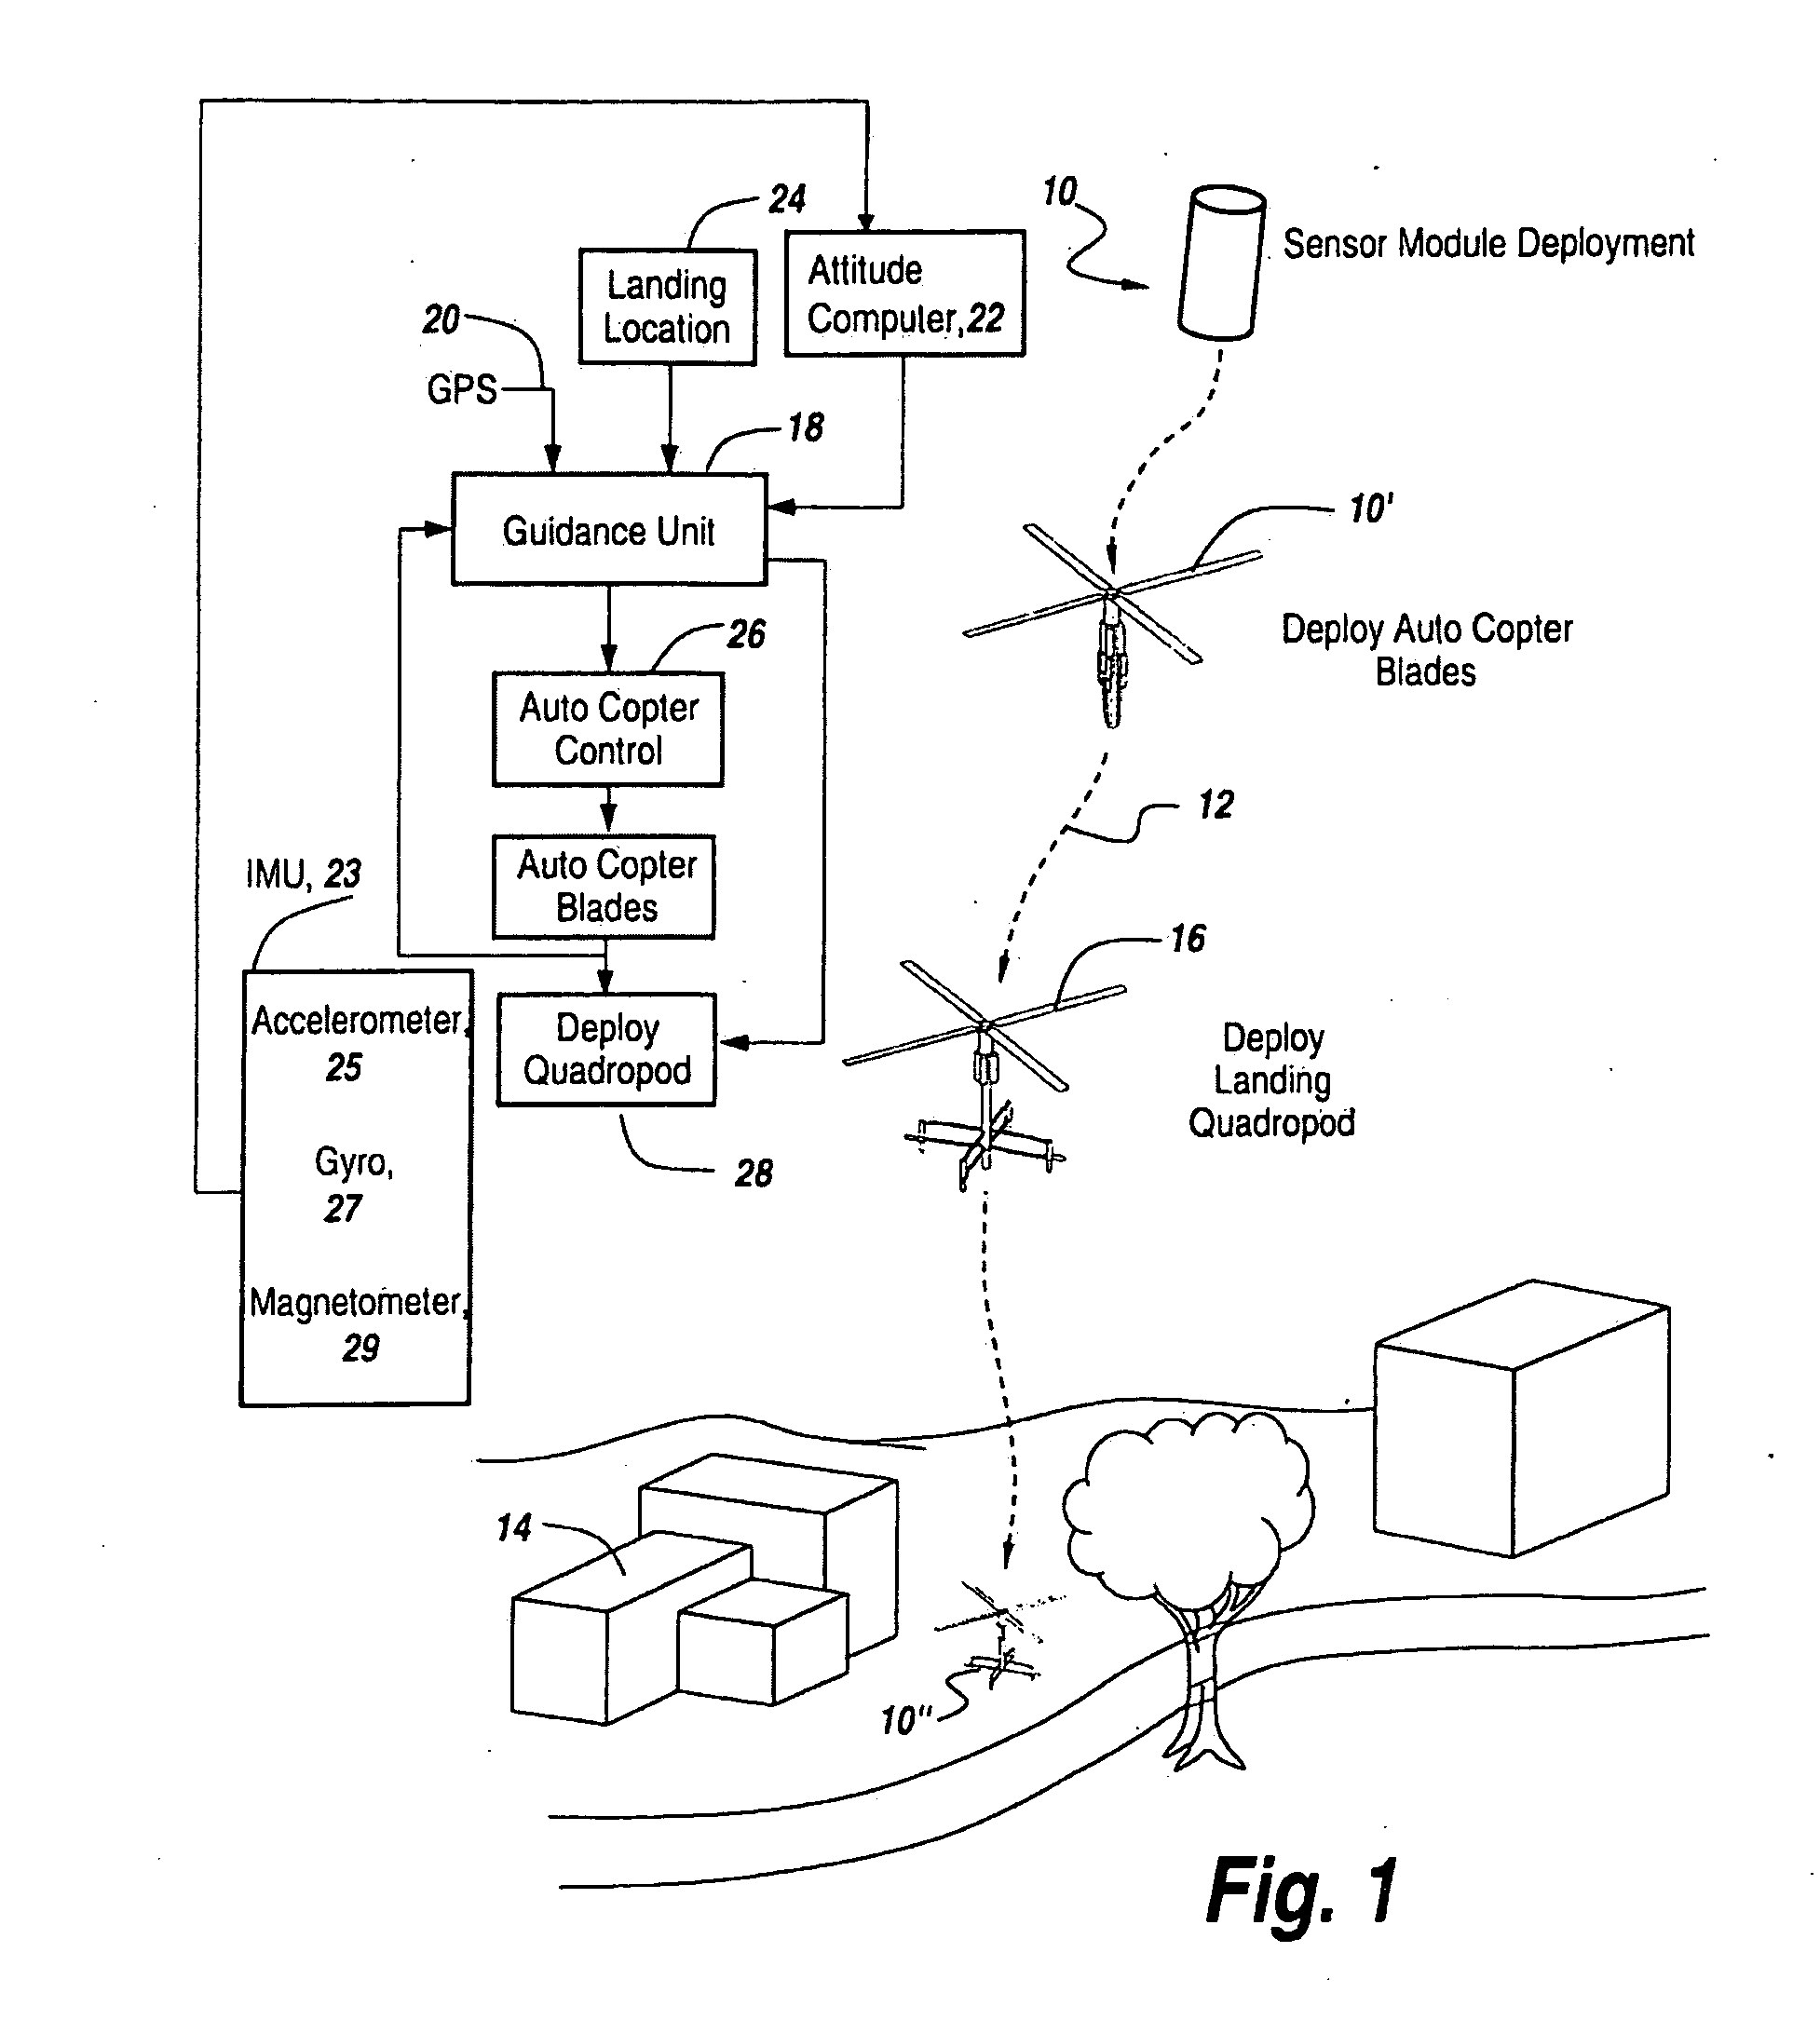 Covert sensor emplacement using autorotational delivery mechanism